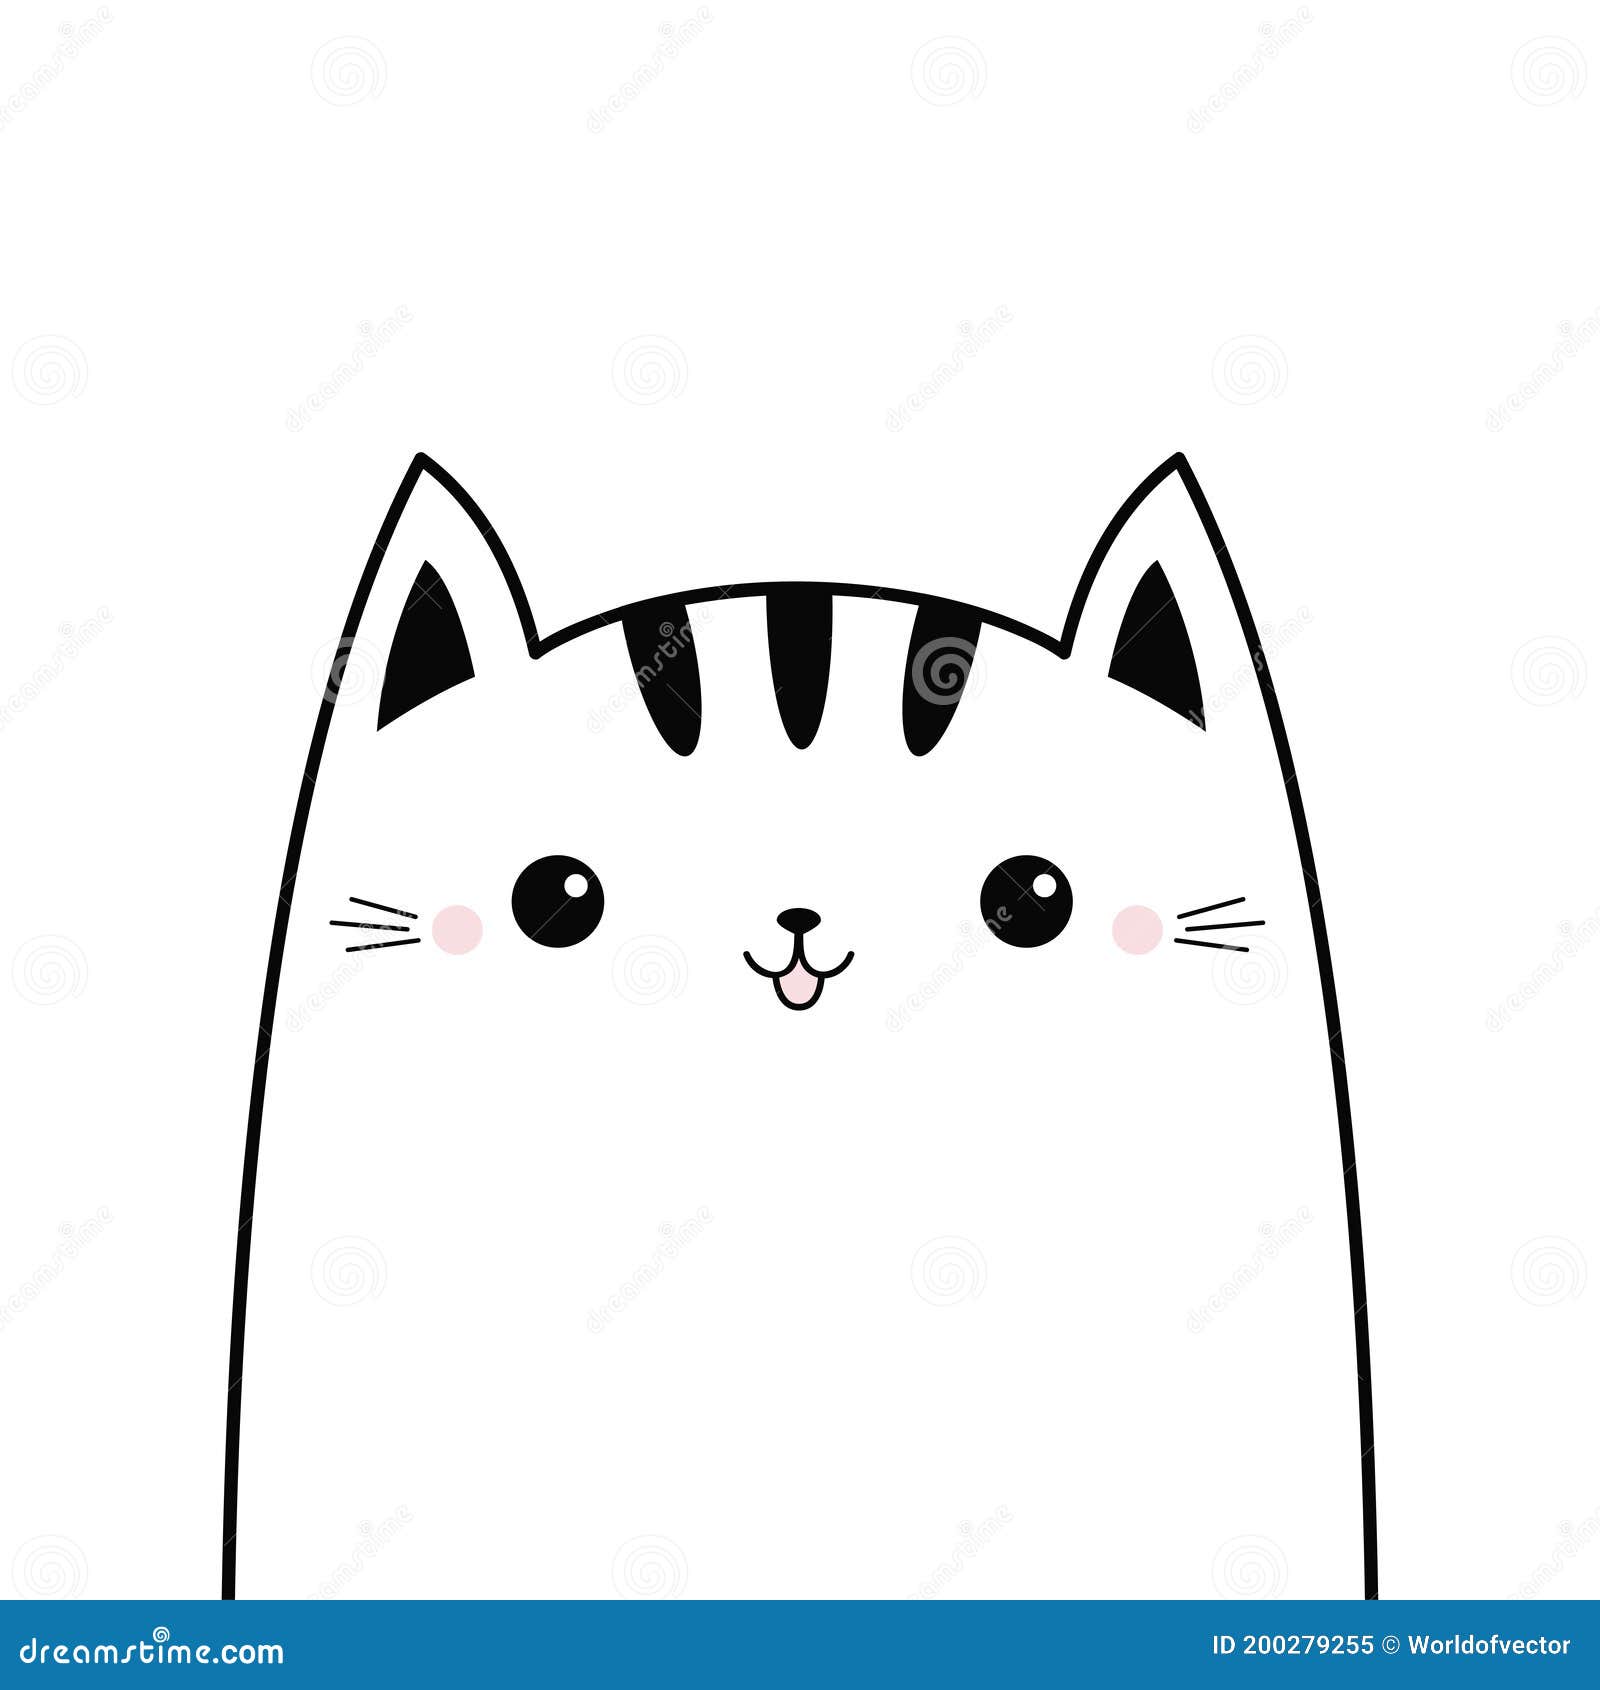 Rosy Cheeks Meow Cat Sticker